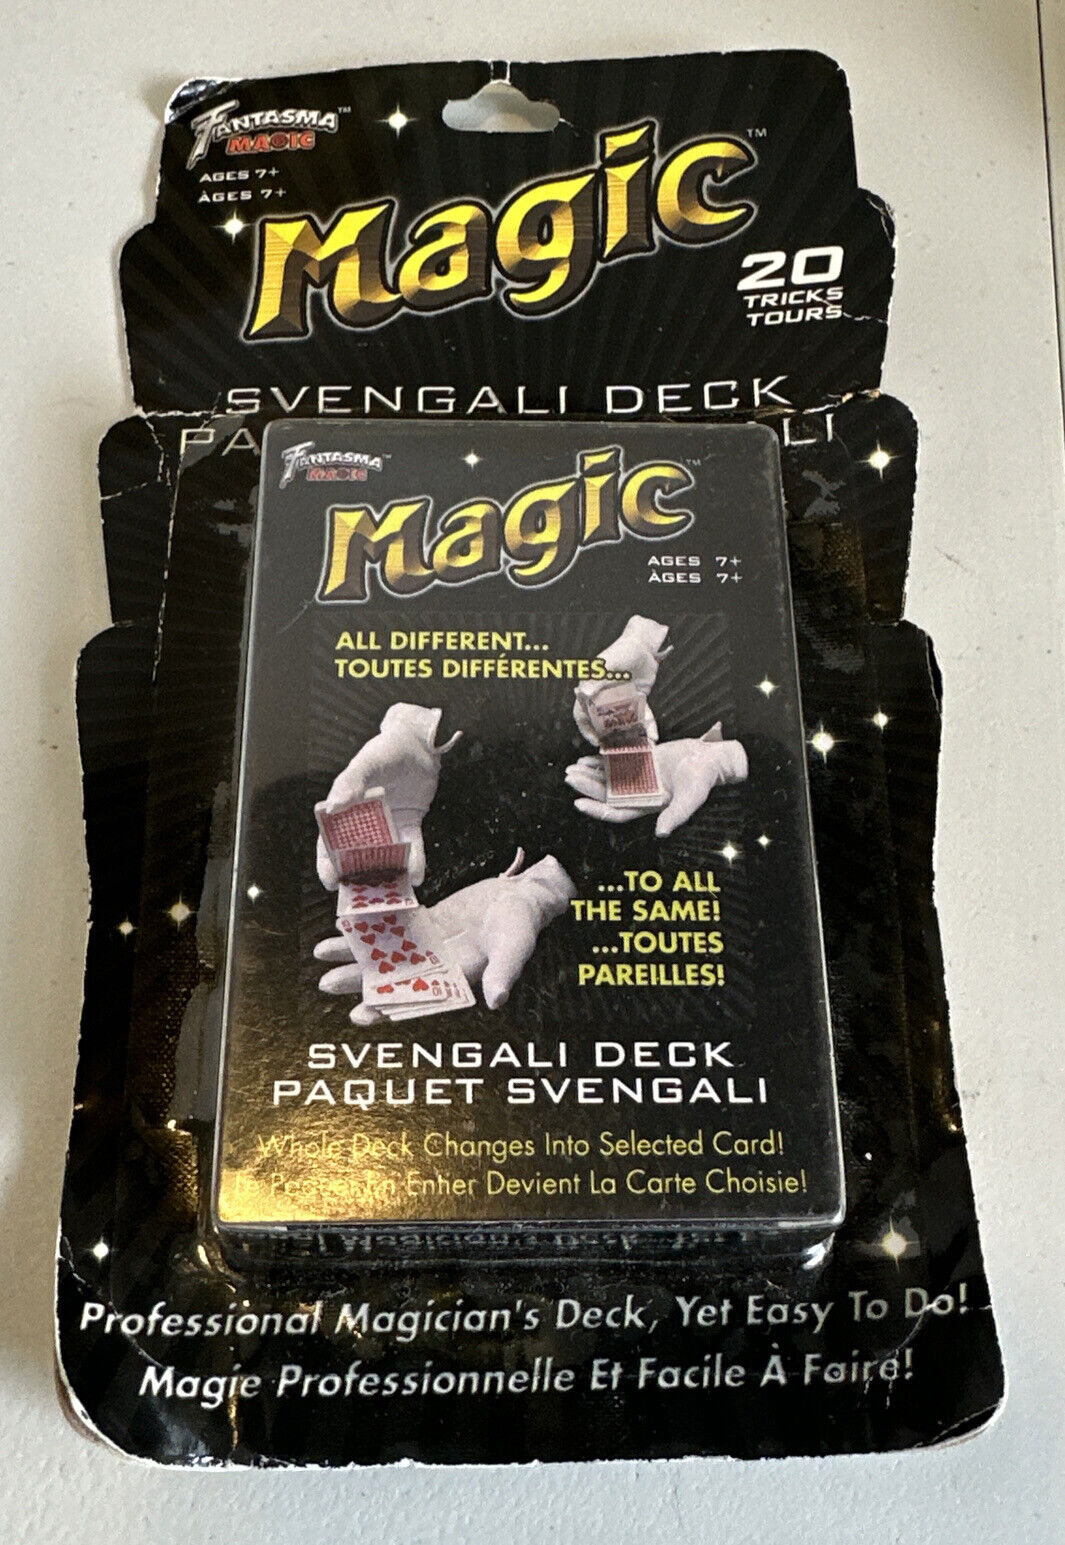 NEW Fantasma Toys, Magic Svengali Deck, Over 20 Tricks, 2009, SEALED, cards